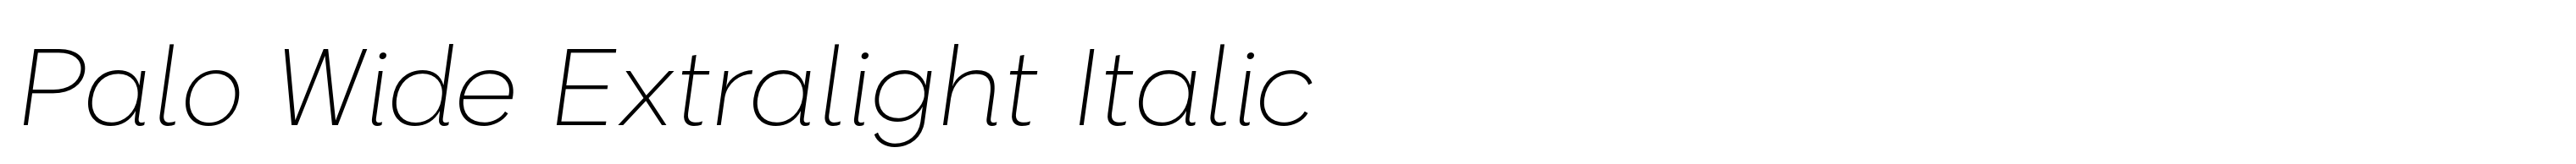 Palo Wide Extralight Italic